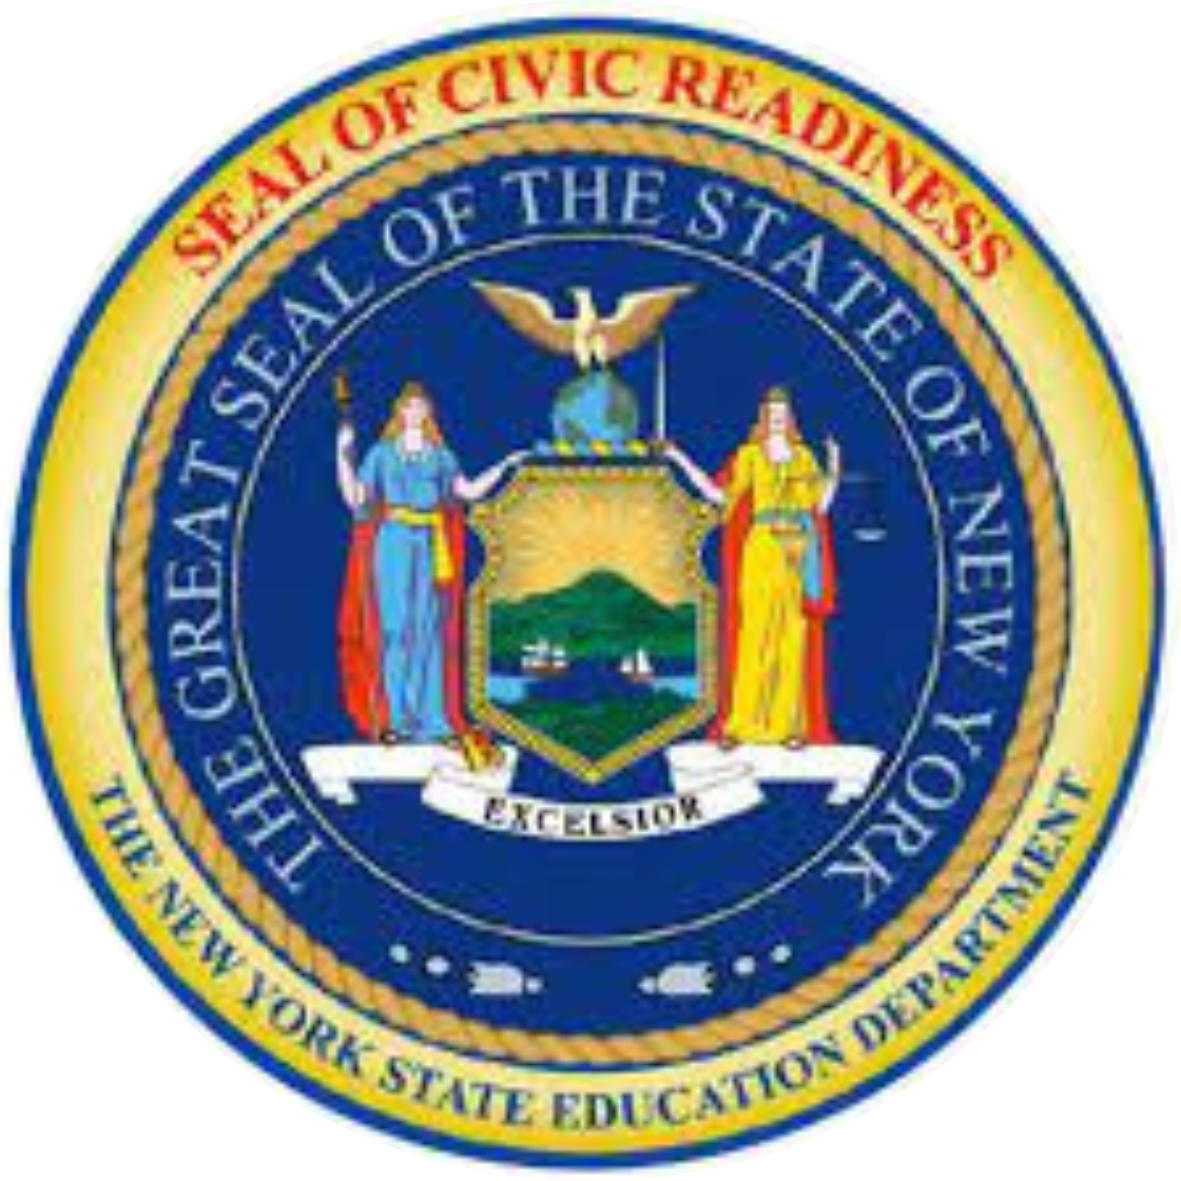 NYS Civic Readiness